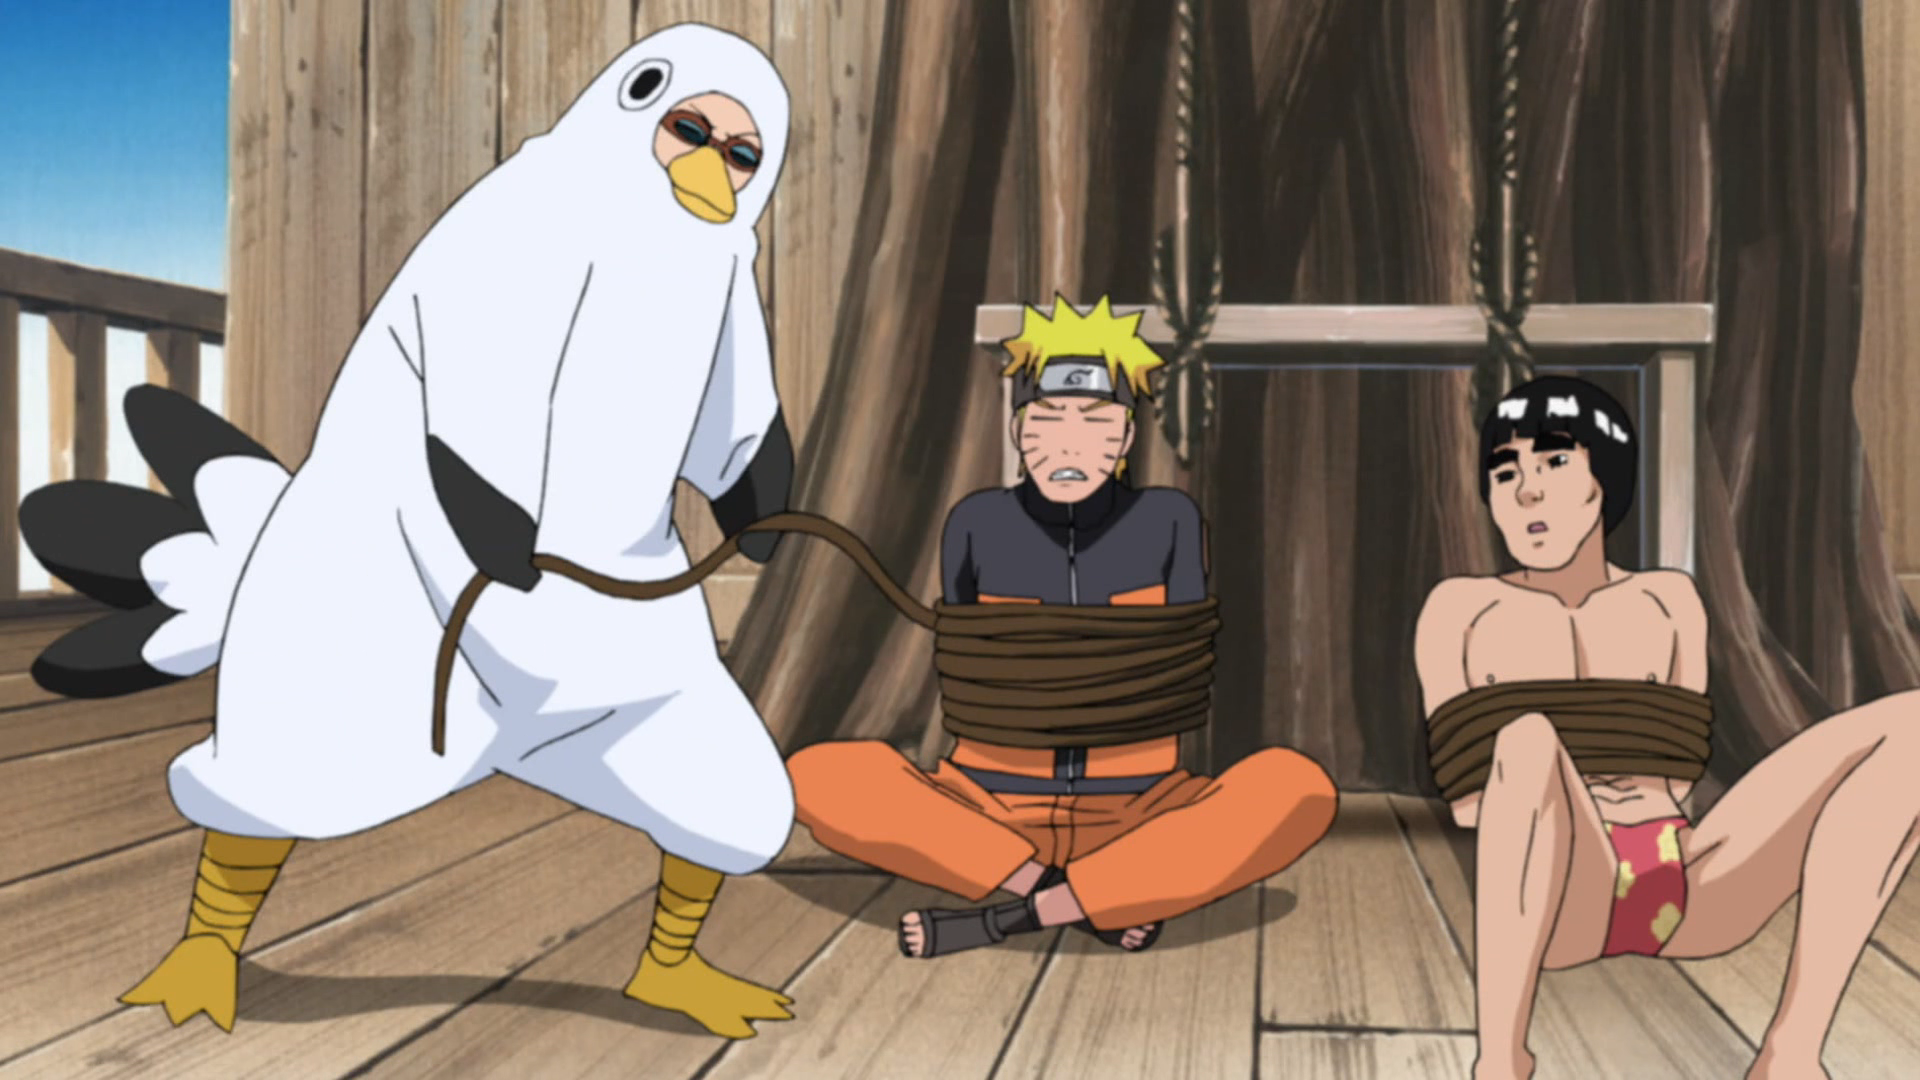 Arte realista mostra como seria o visual de Kakashi de Naruto